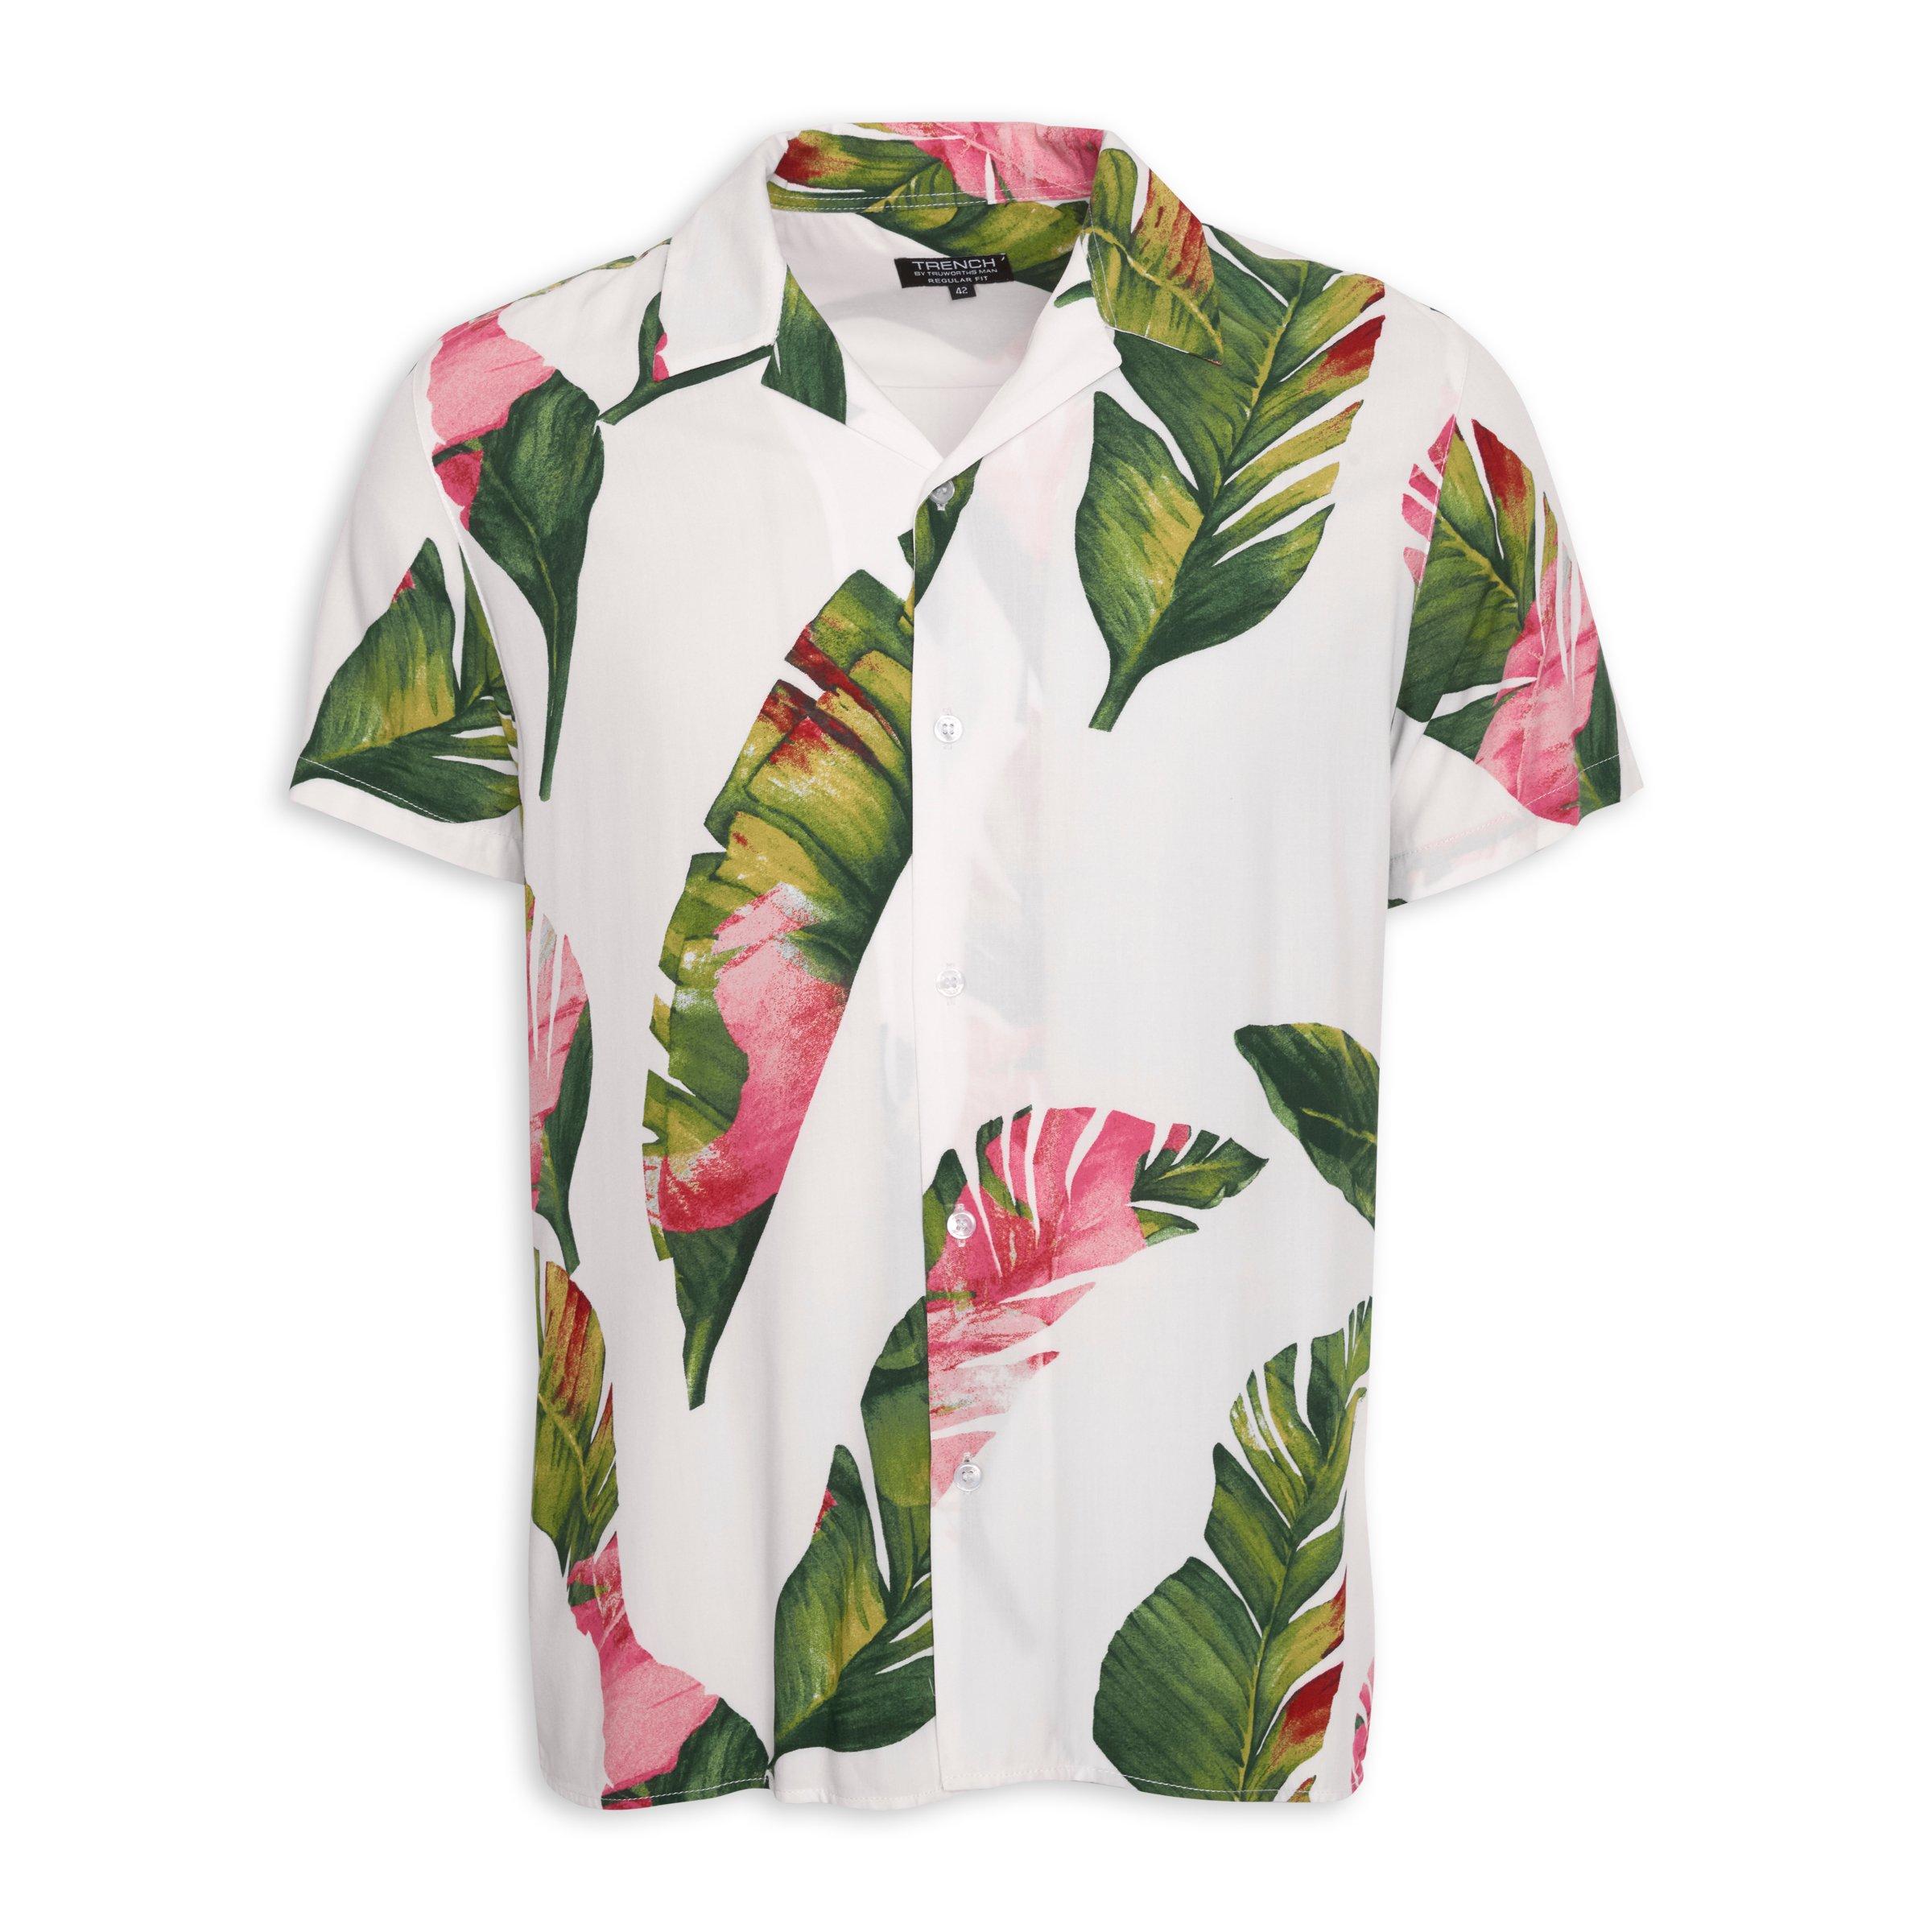 Buy Truworths Man Pink Floral Shirt Online | Truworths